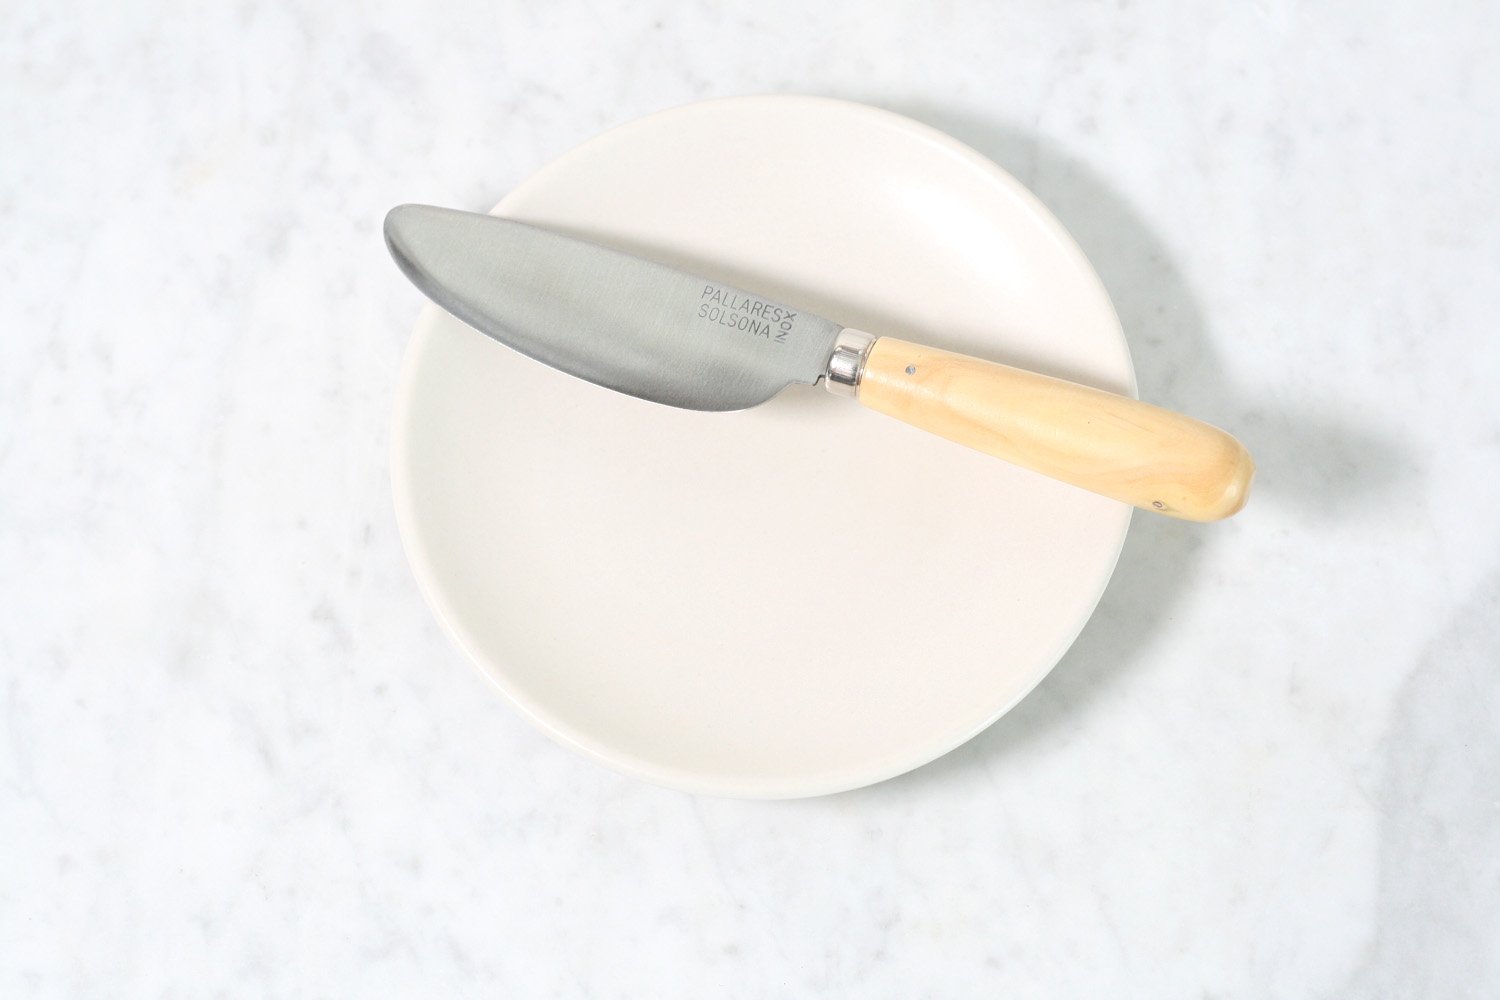 Carbon + Boxwood Kitchen Knife by Pallarès Solsona